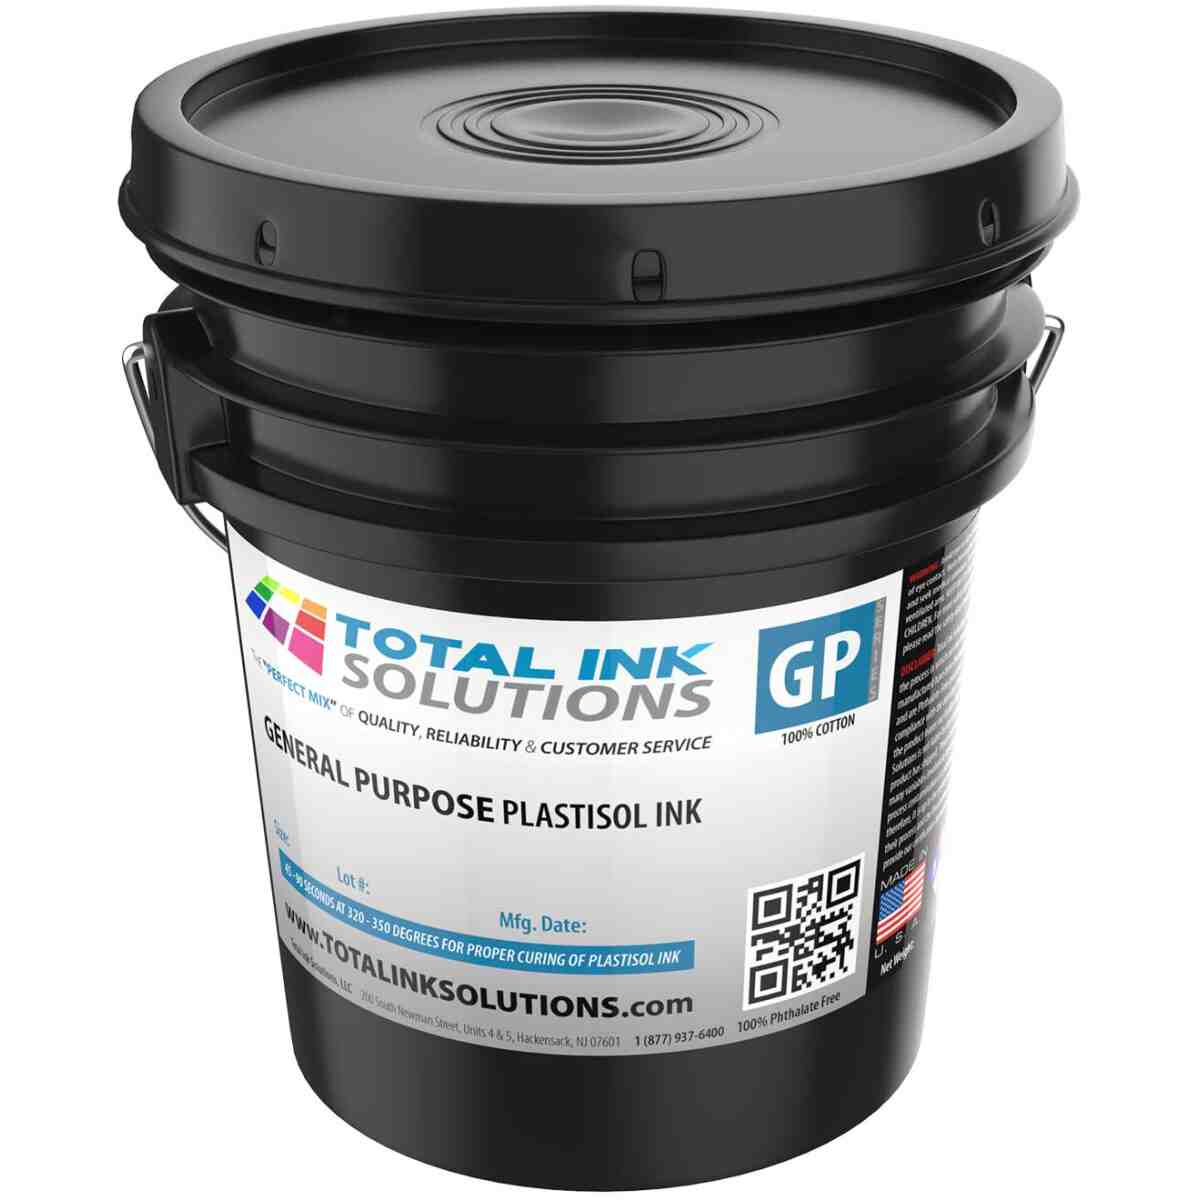 Predator Series Plastisol Ink - 5 Gallon TOTAL INK SOLUTIONS®